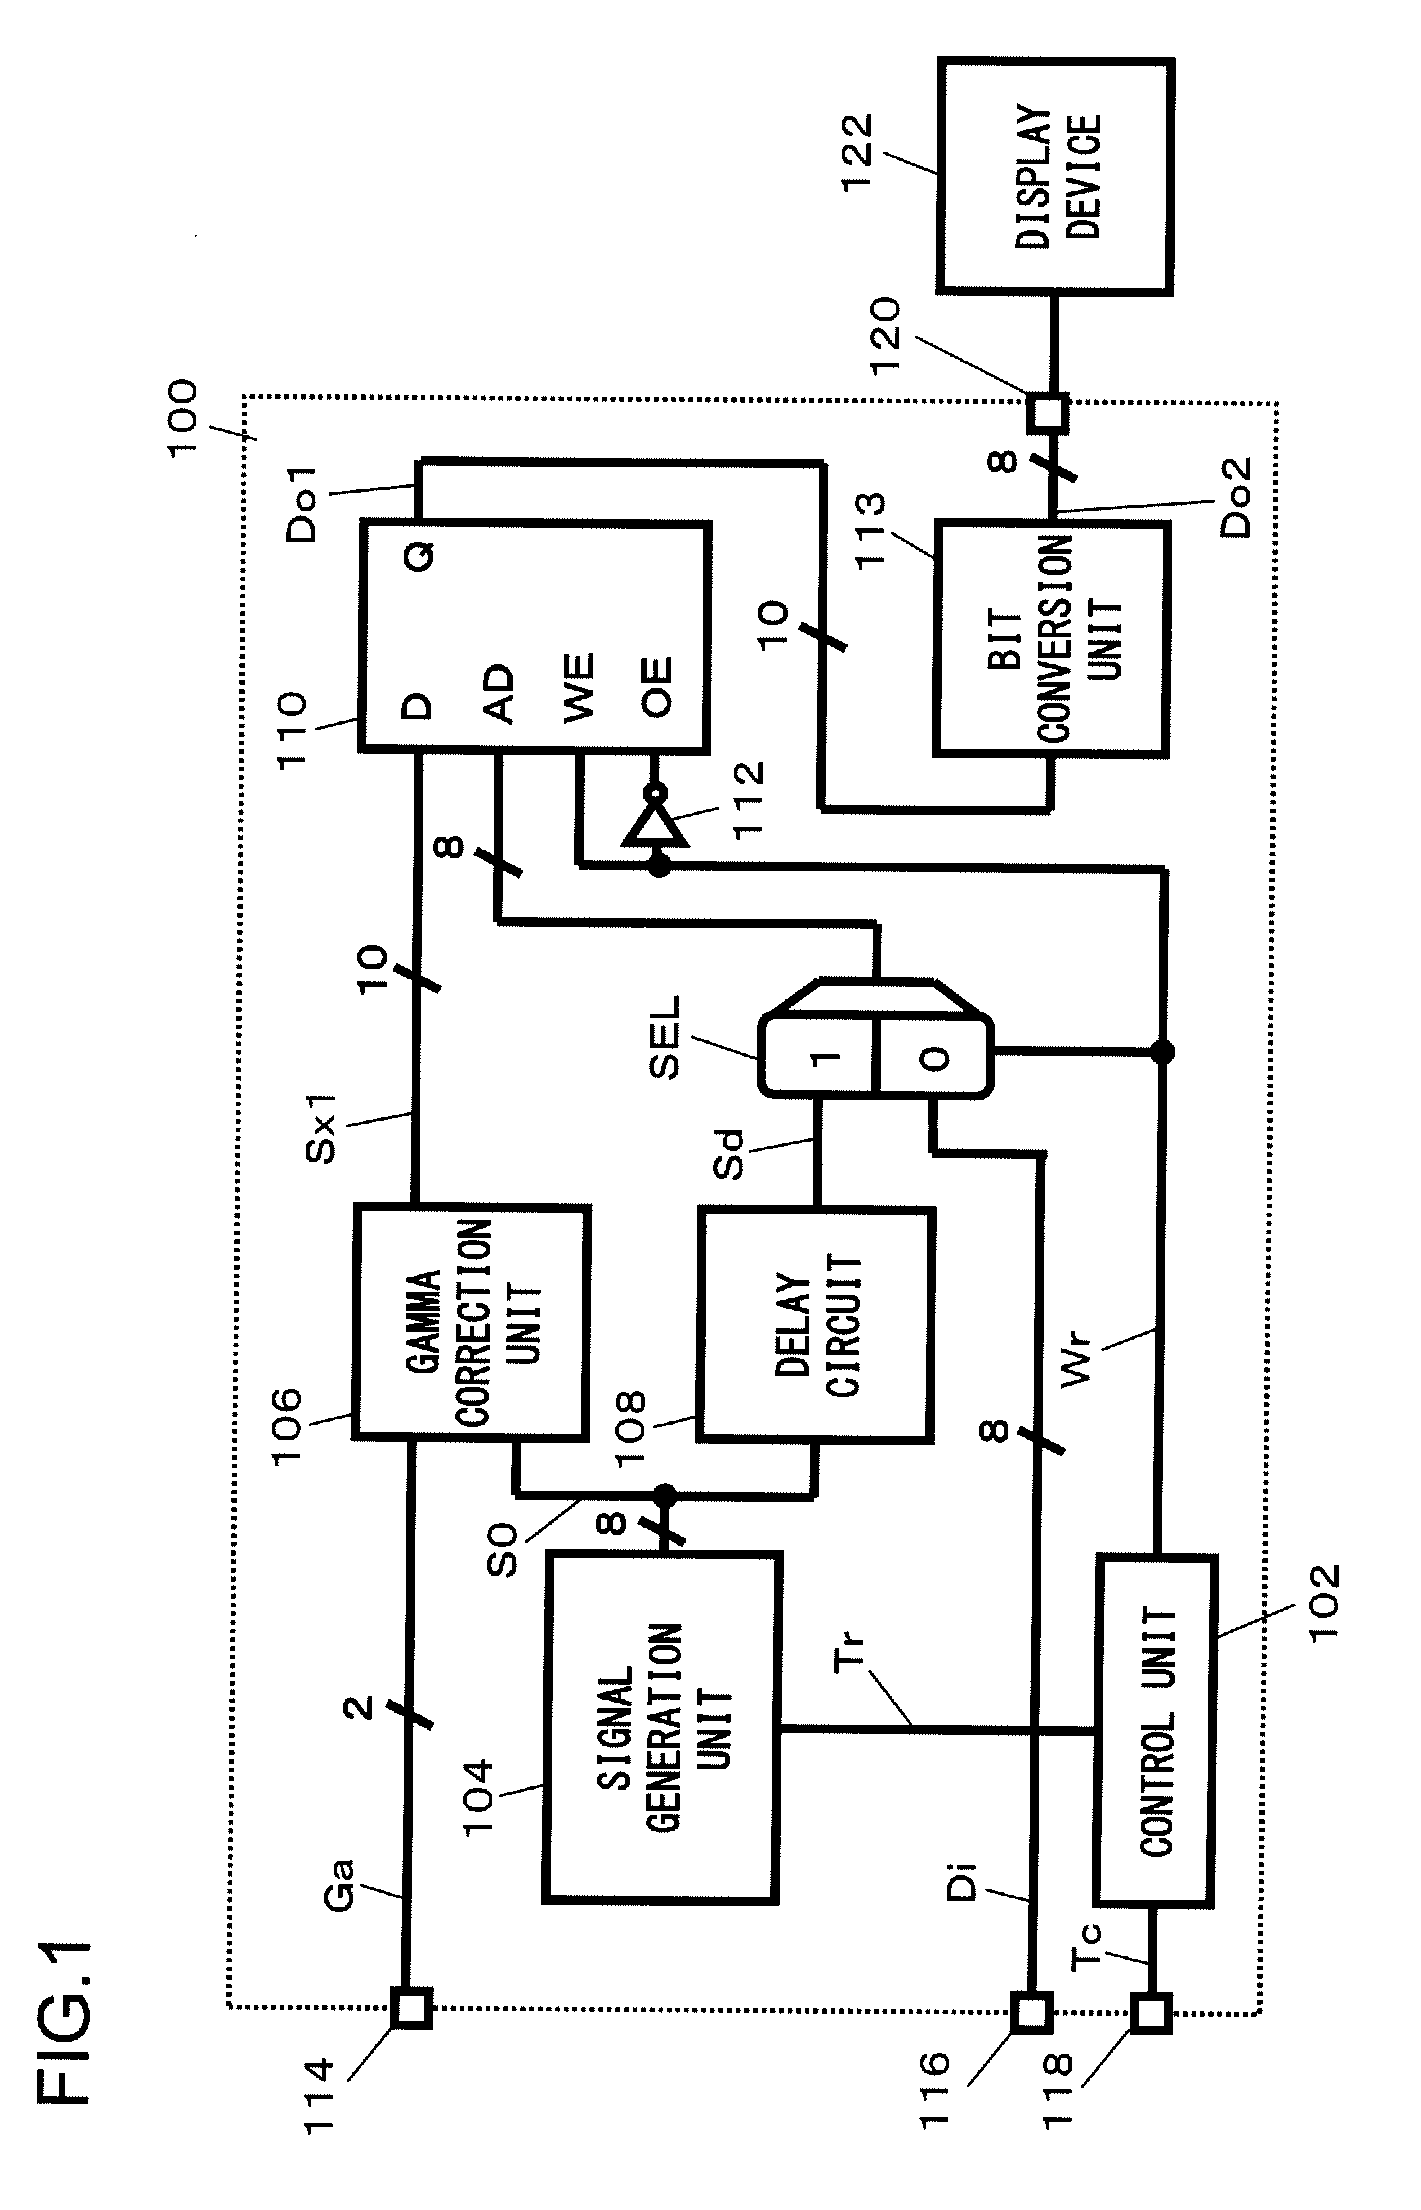 Image processing circuit